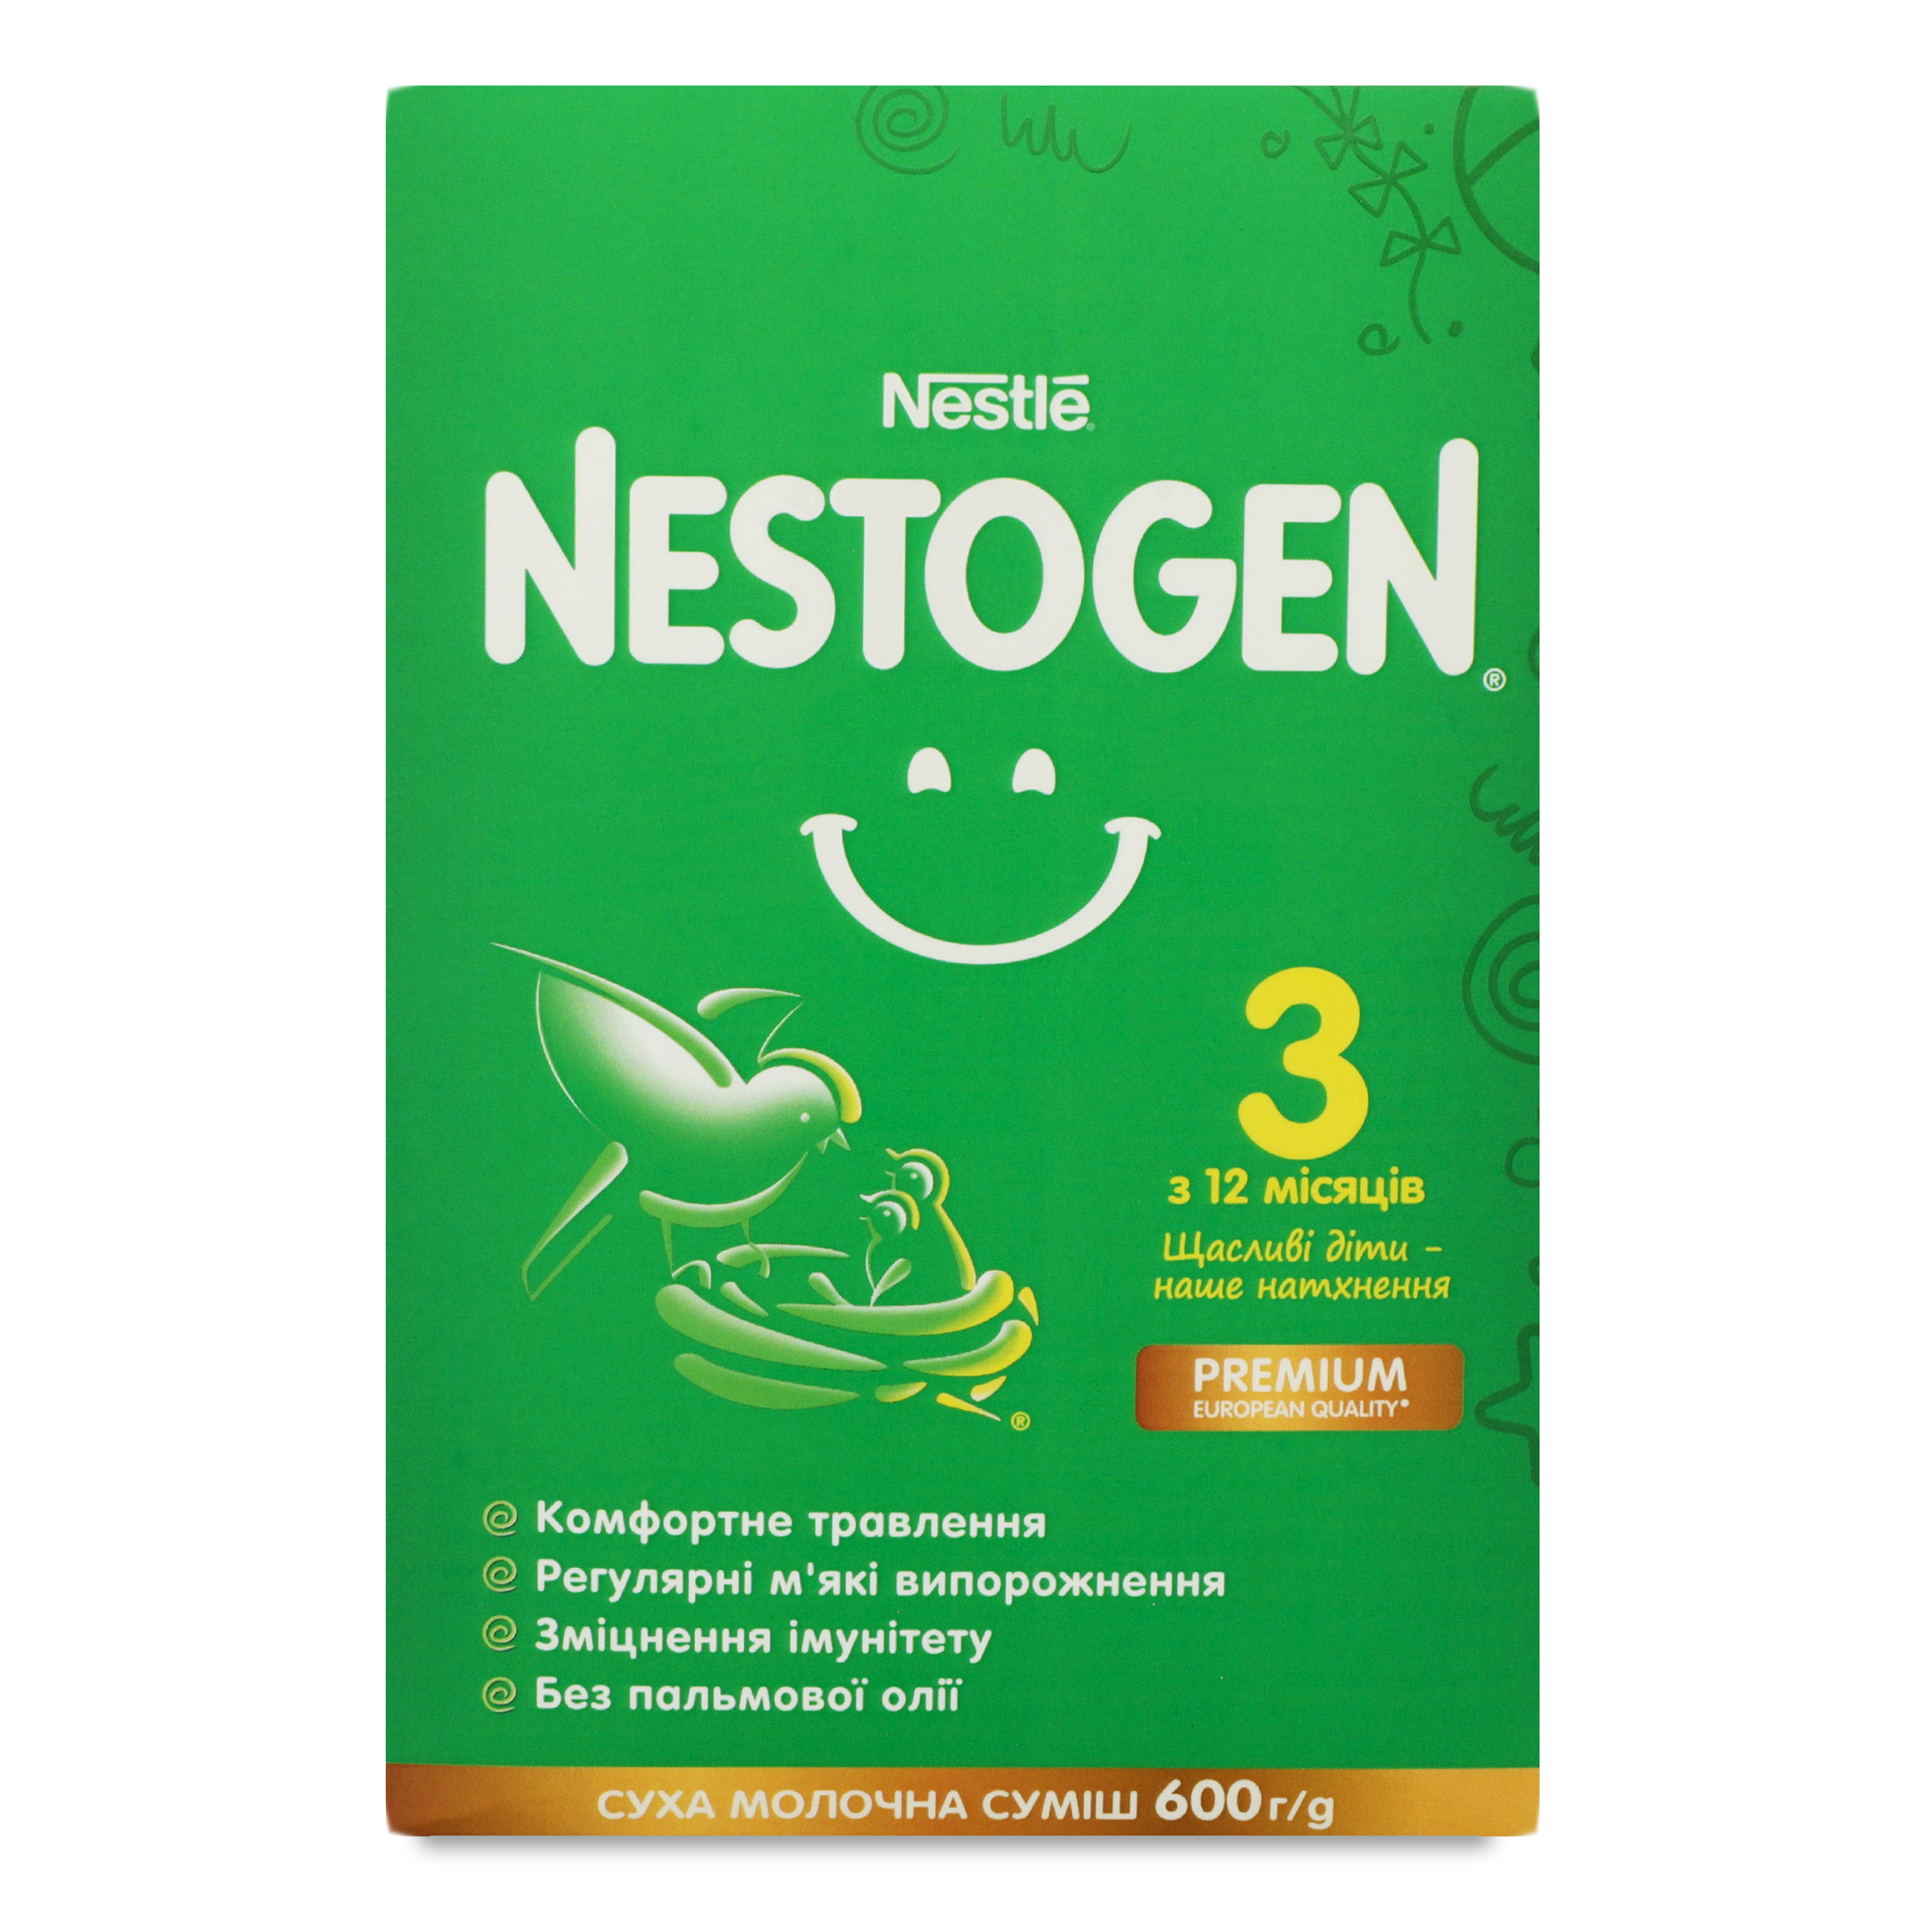 Nestogen 3 dry milk mixture for children from 12 months with lactobacilli 600g 2